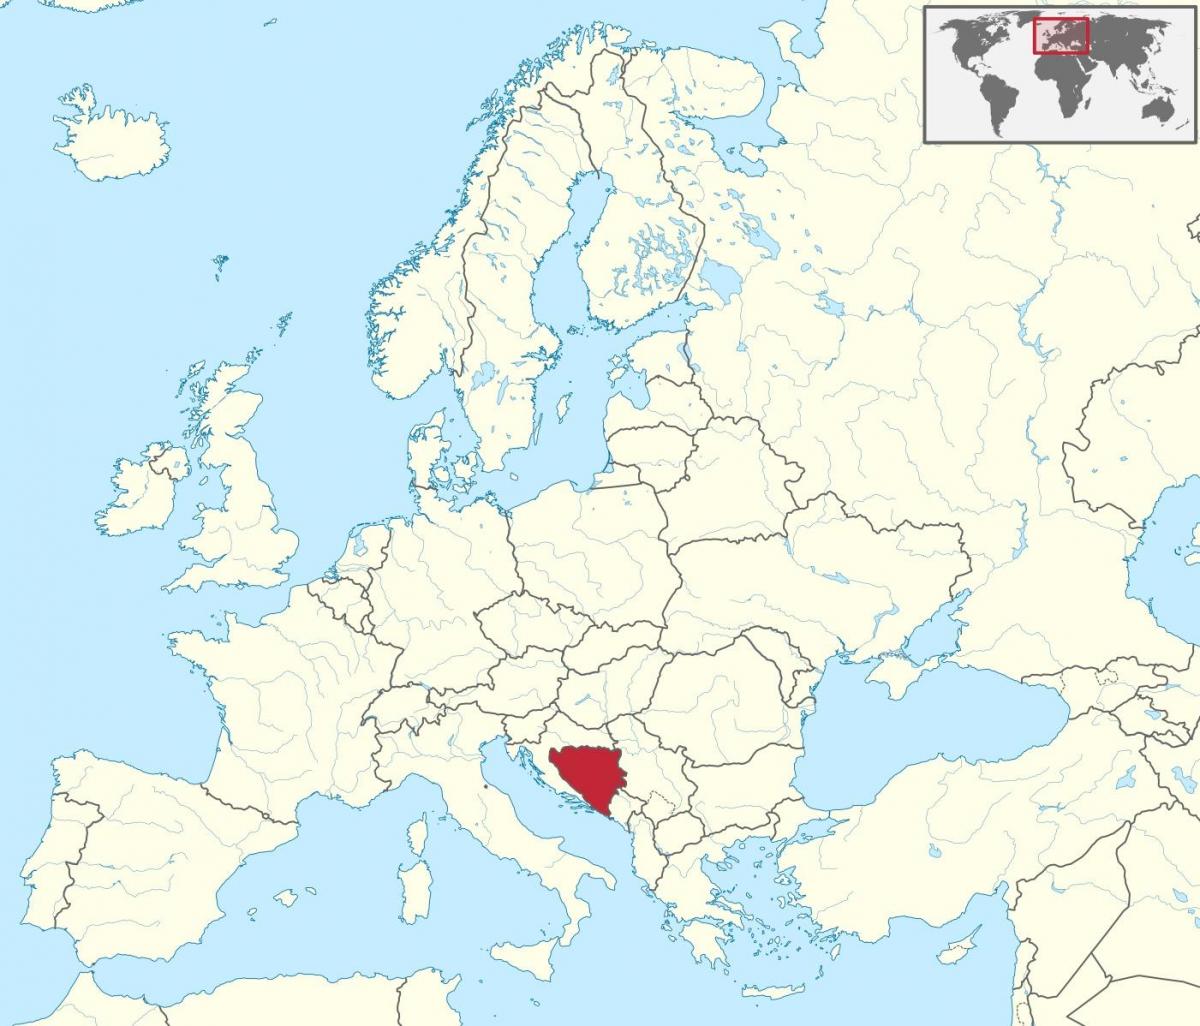 Bosnia-mapa bat, europako